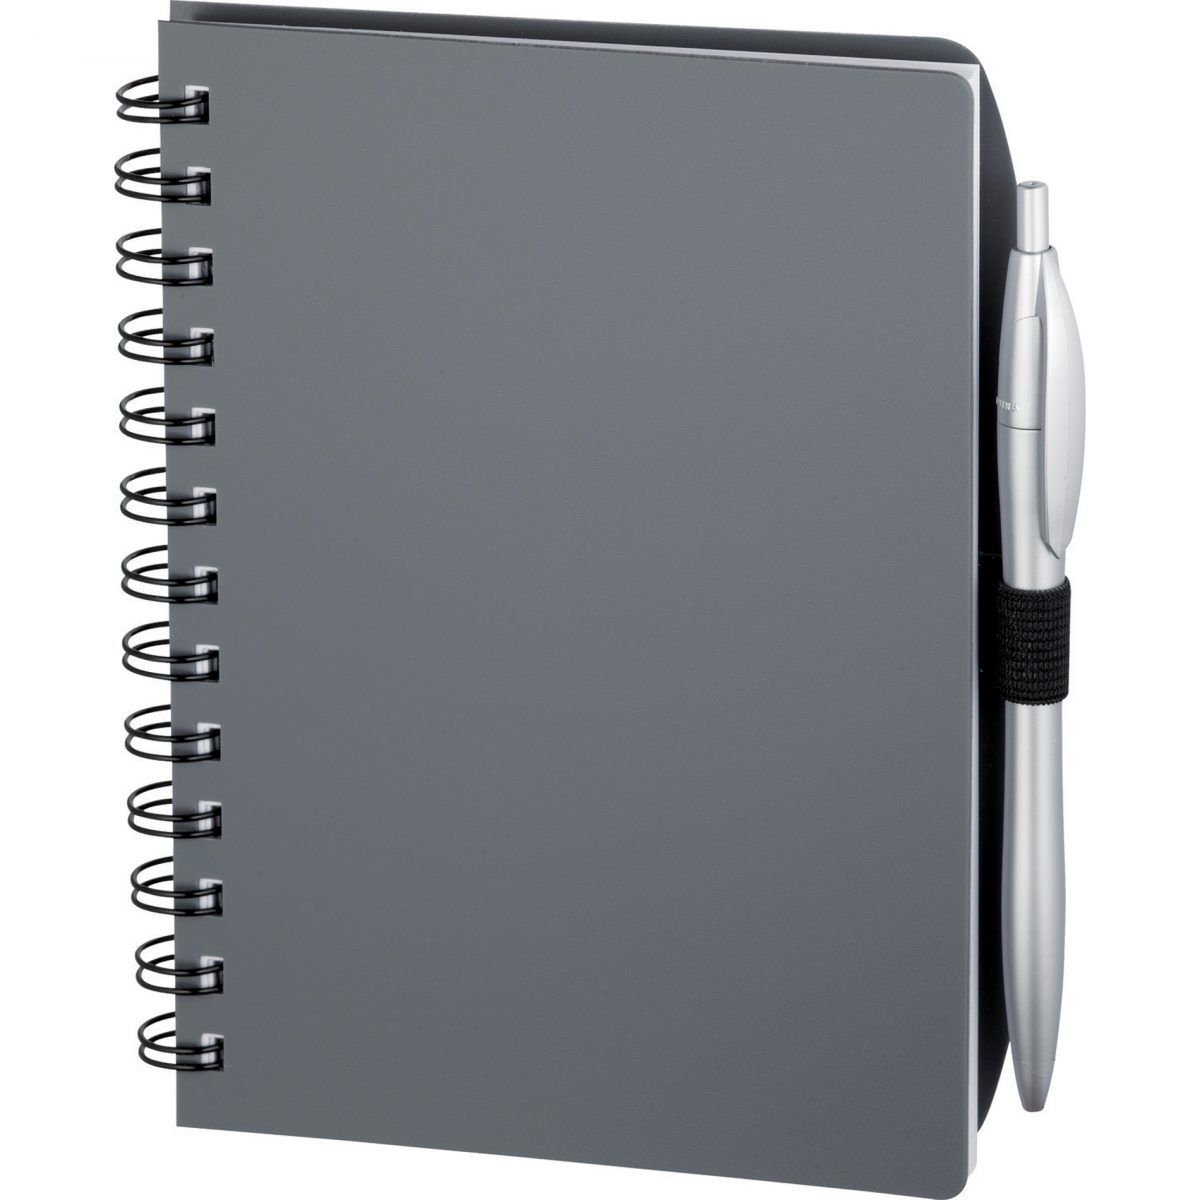 The Coordinator Notebook